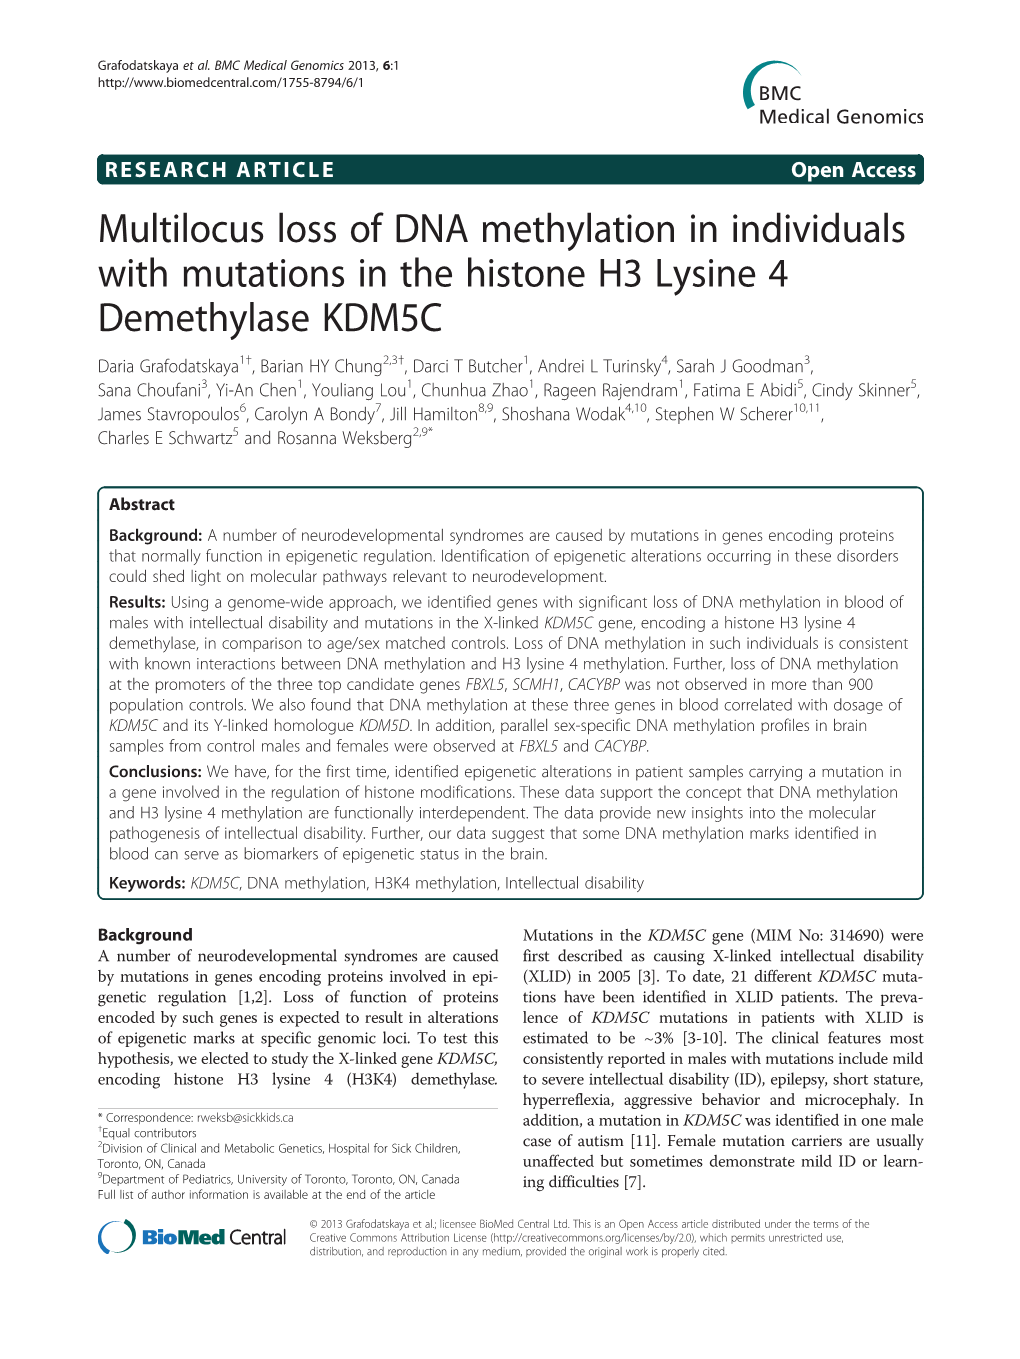 Multilocus Loss of DNA Methylation In